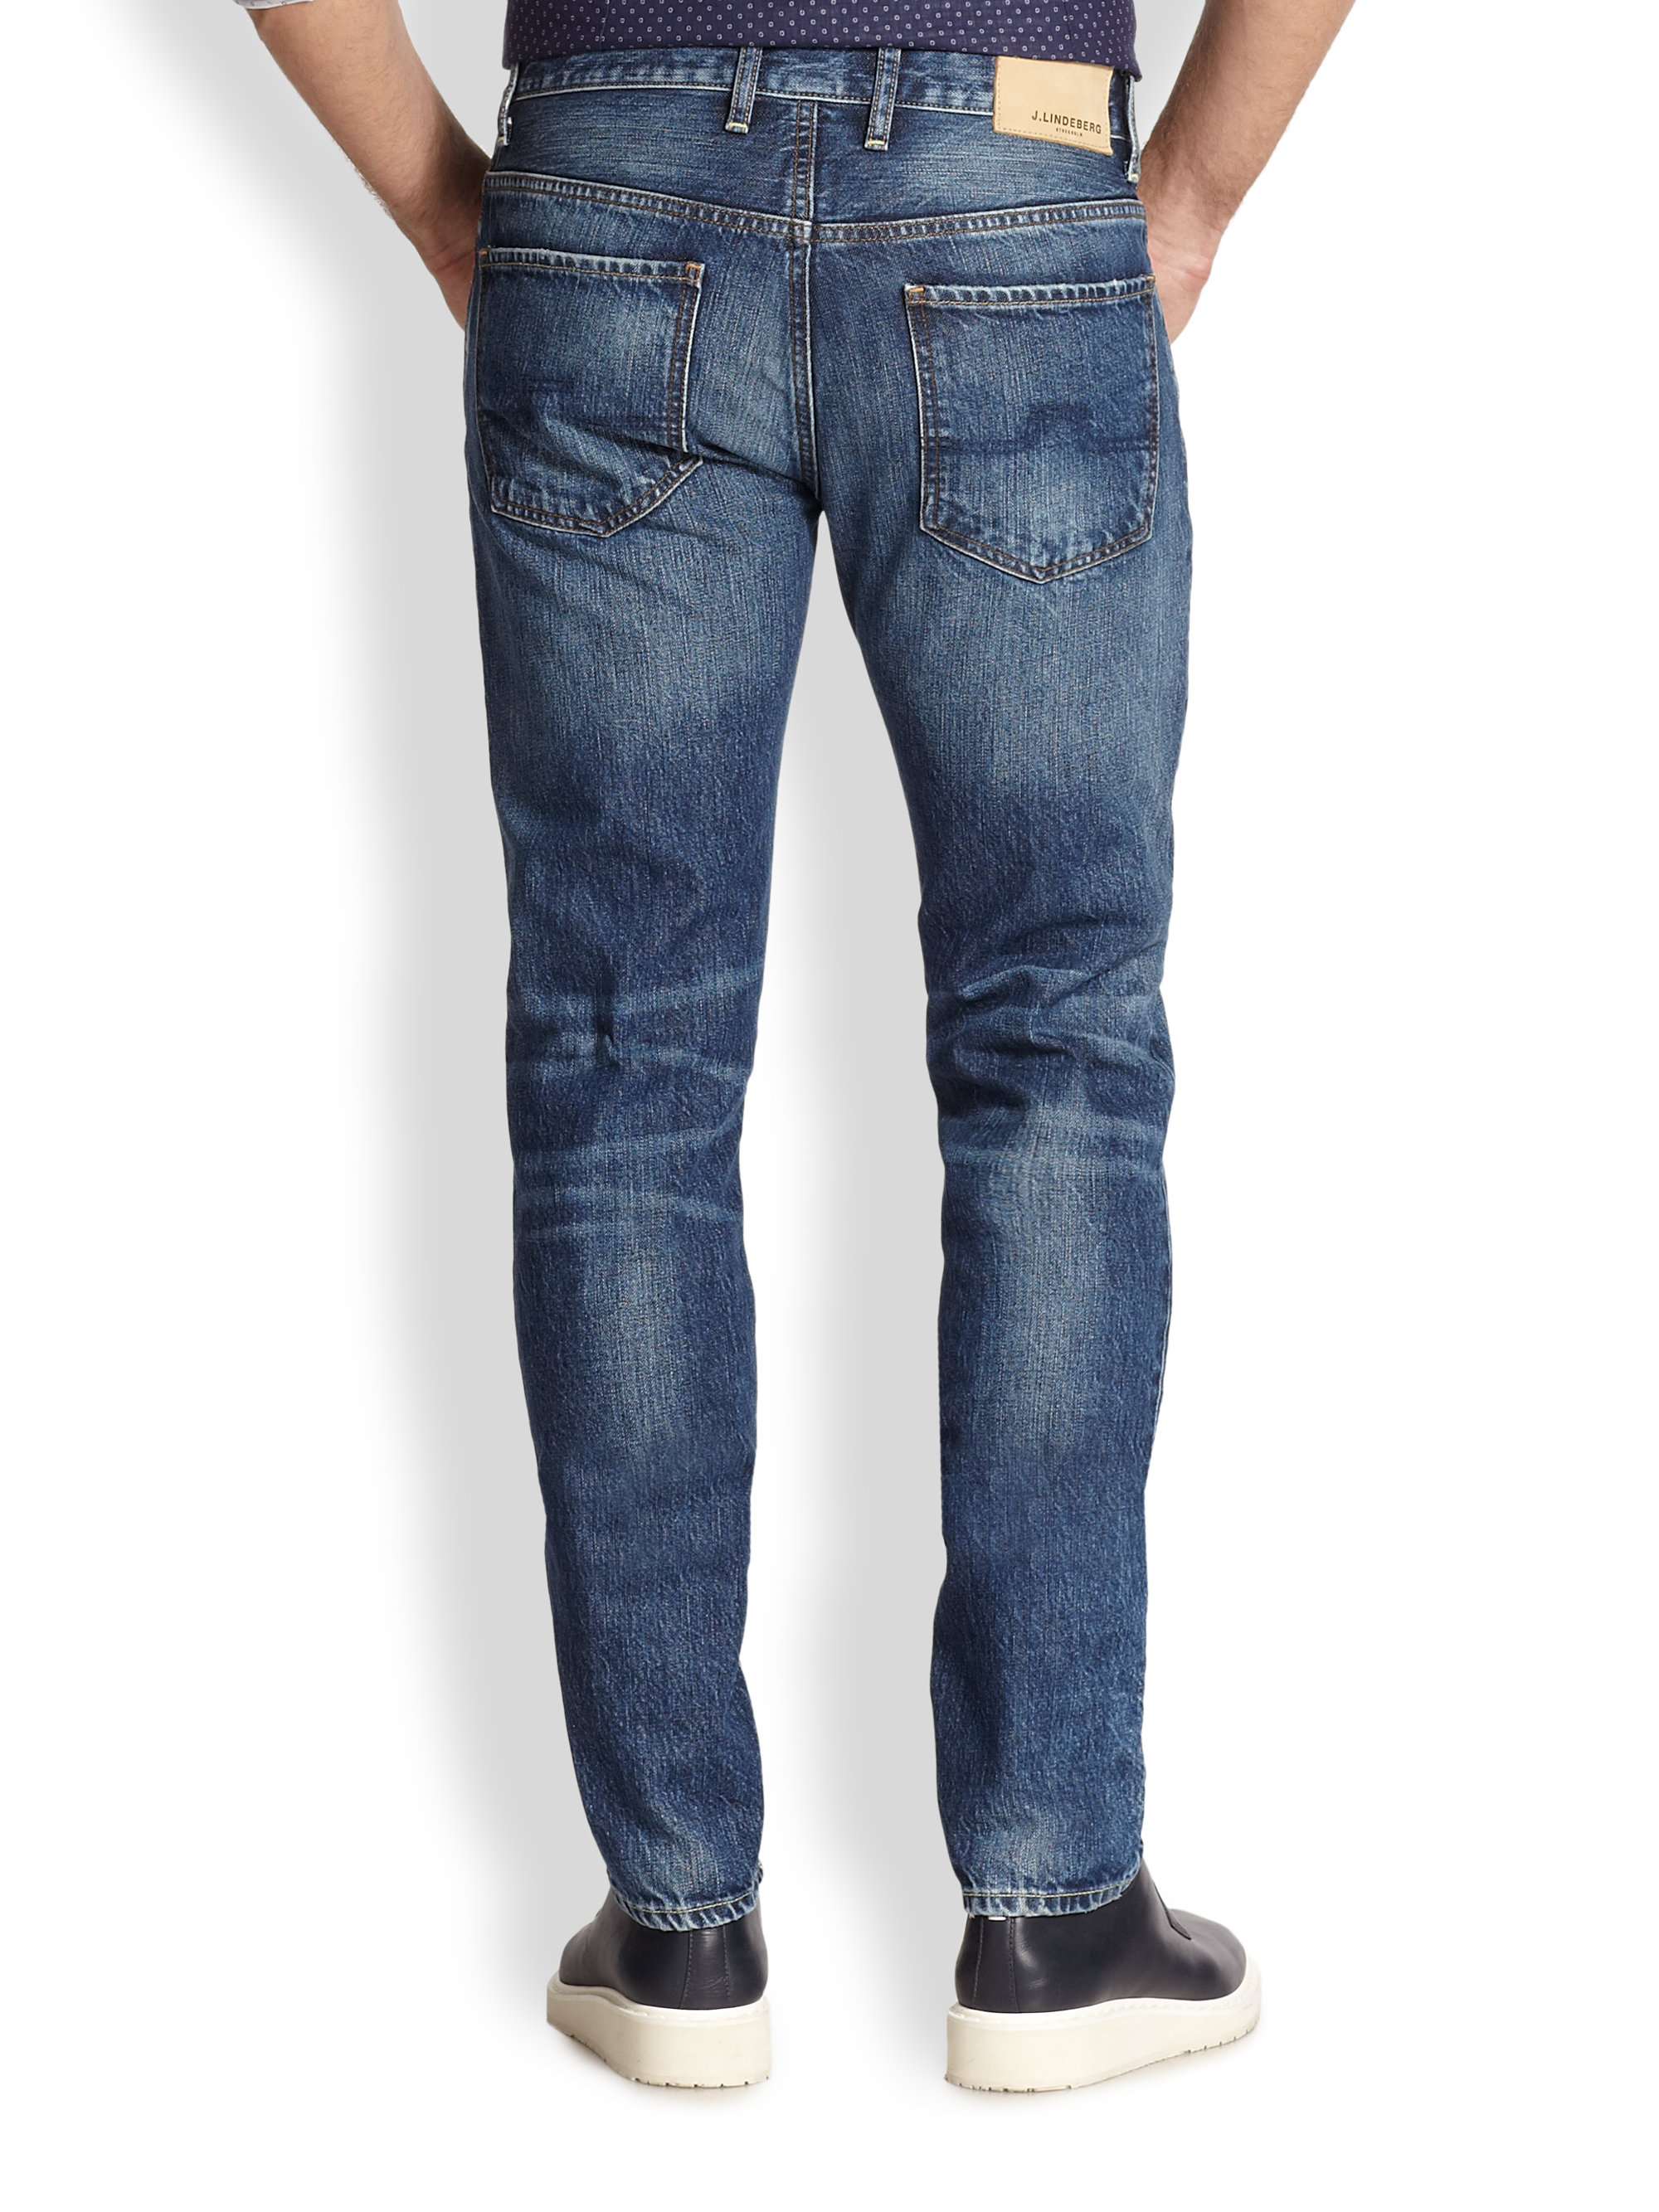 Lyst - J.Lindeberg Jay Deep Bleach Jeans in Blue for Men